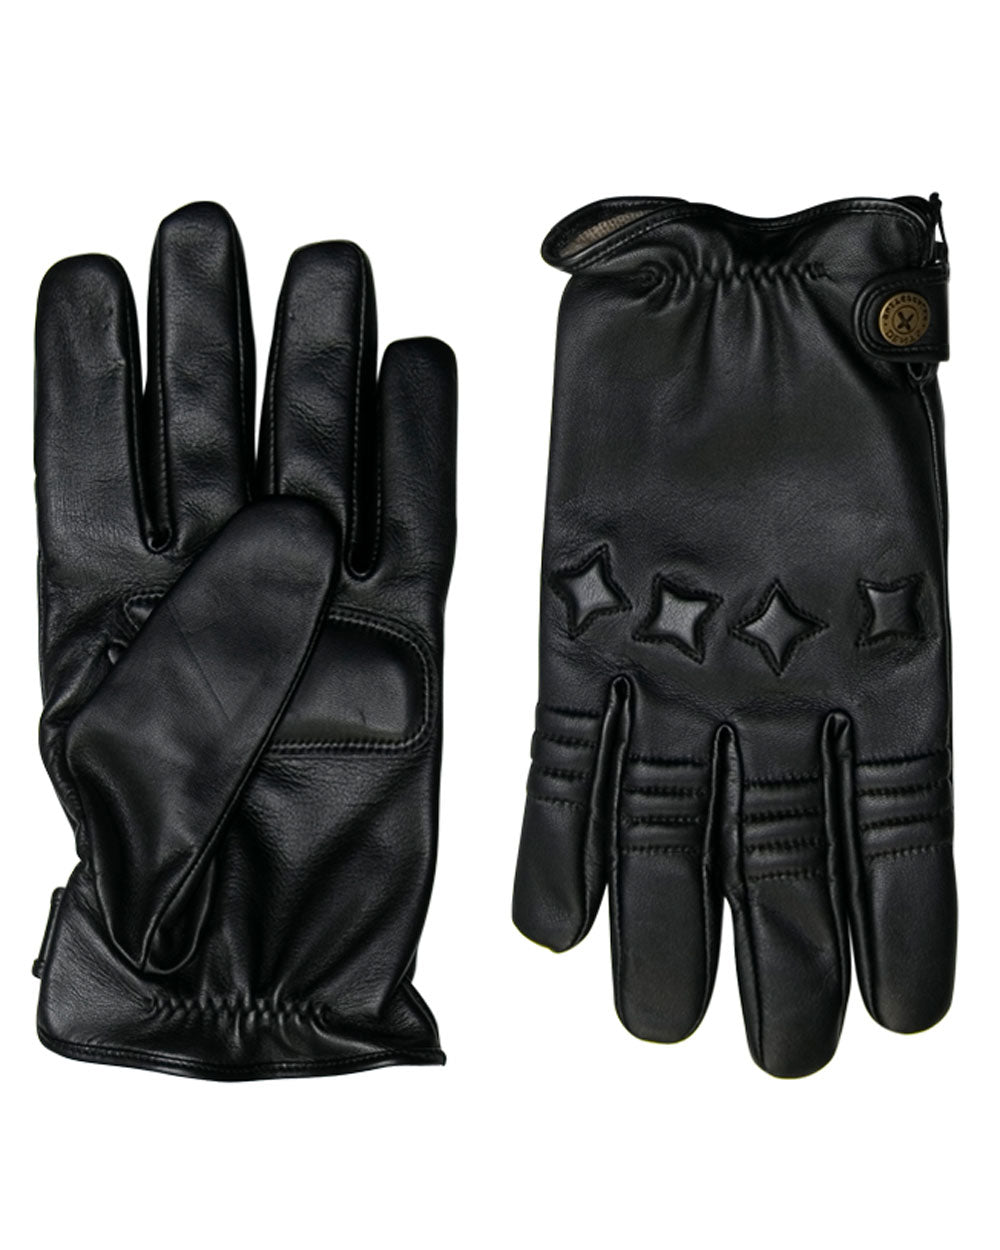 Copper Island Black Leather Gloves